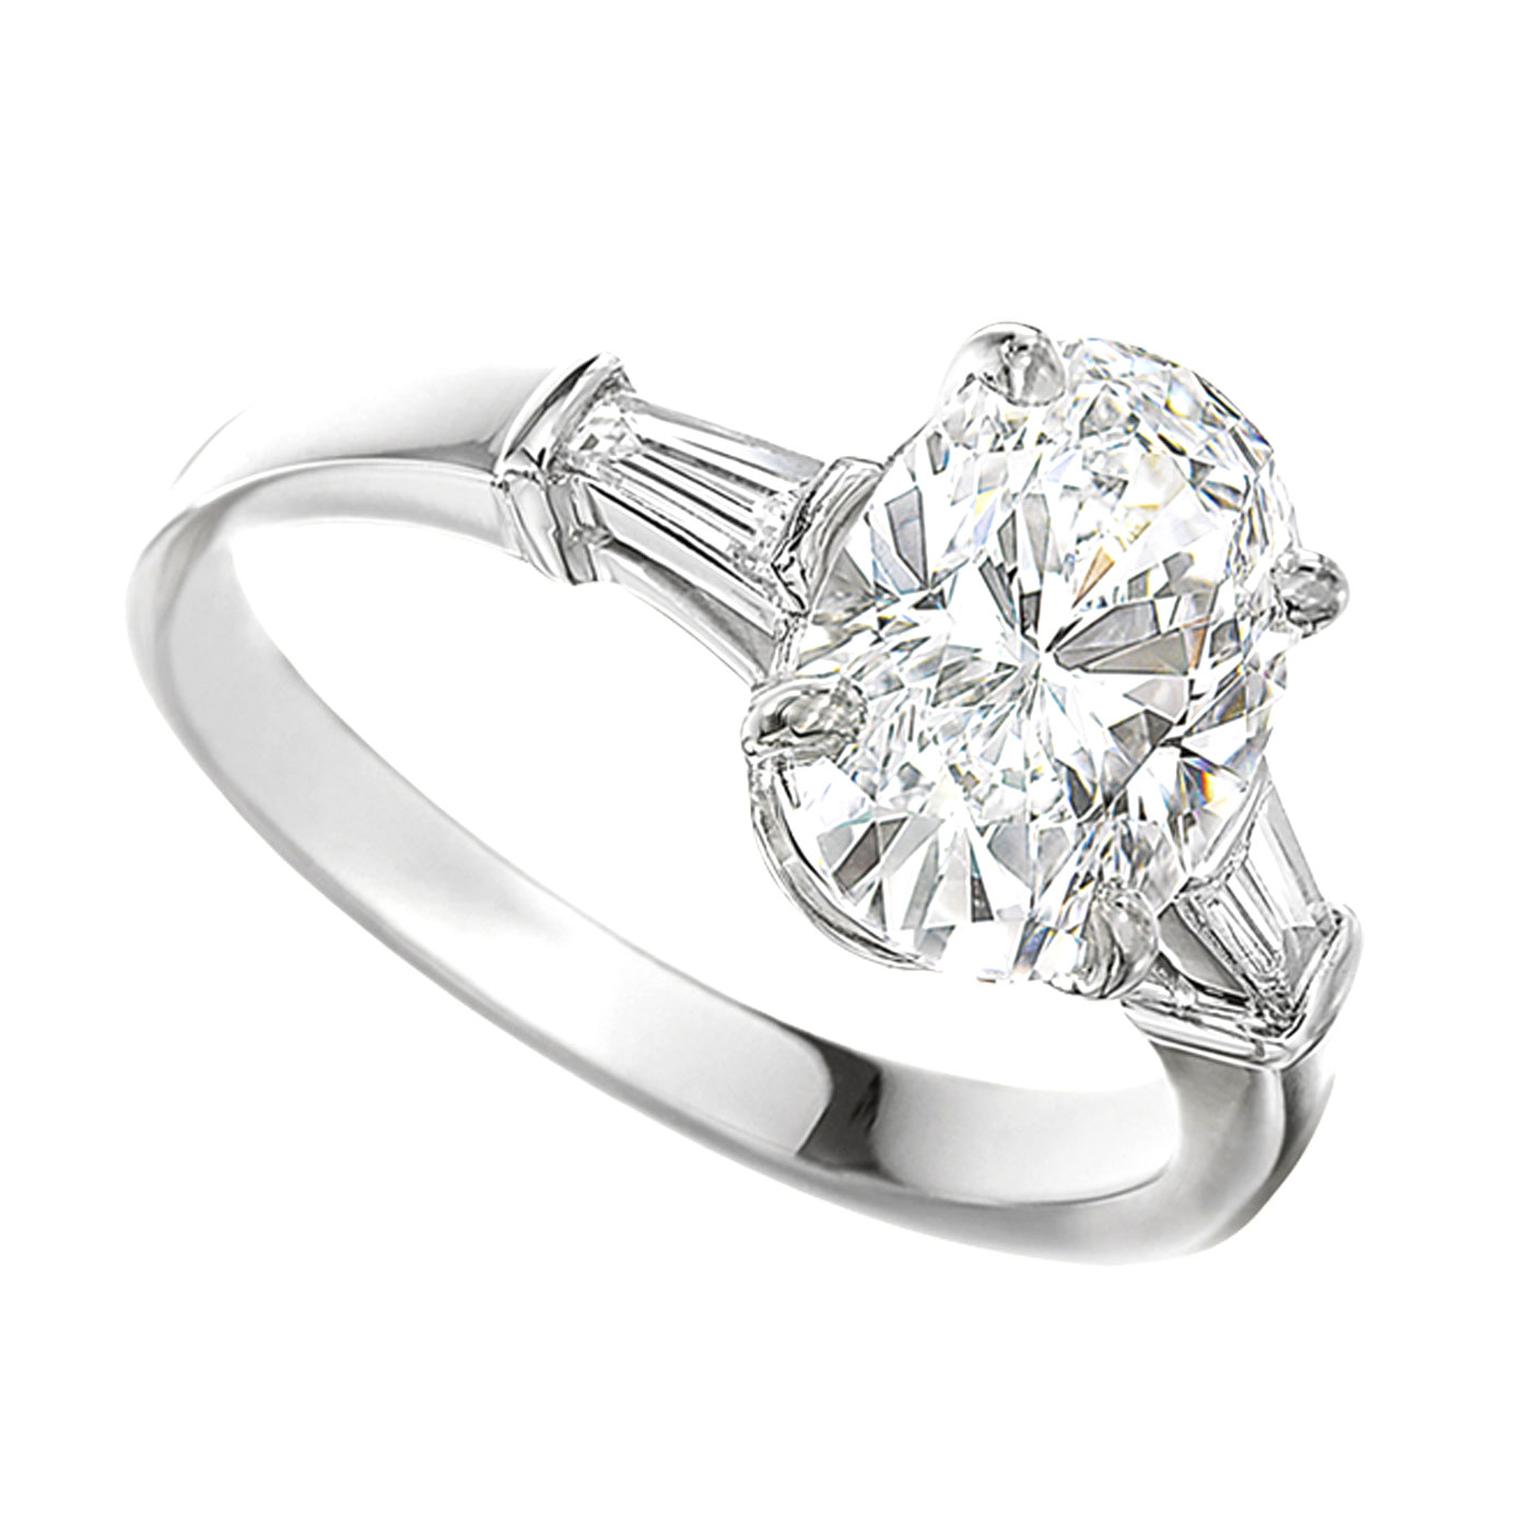 Bulgari oval-cut diamond engagement ring